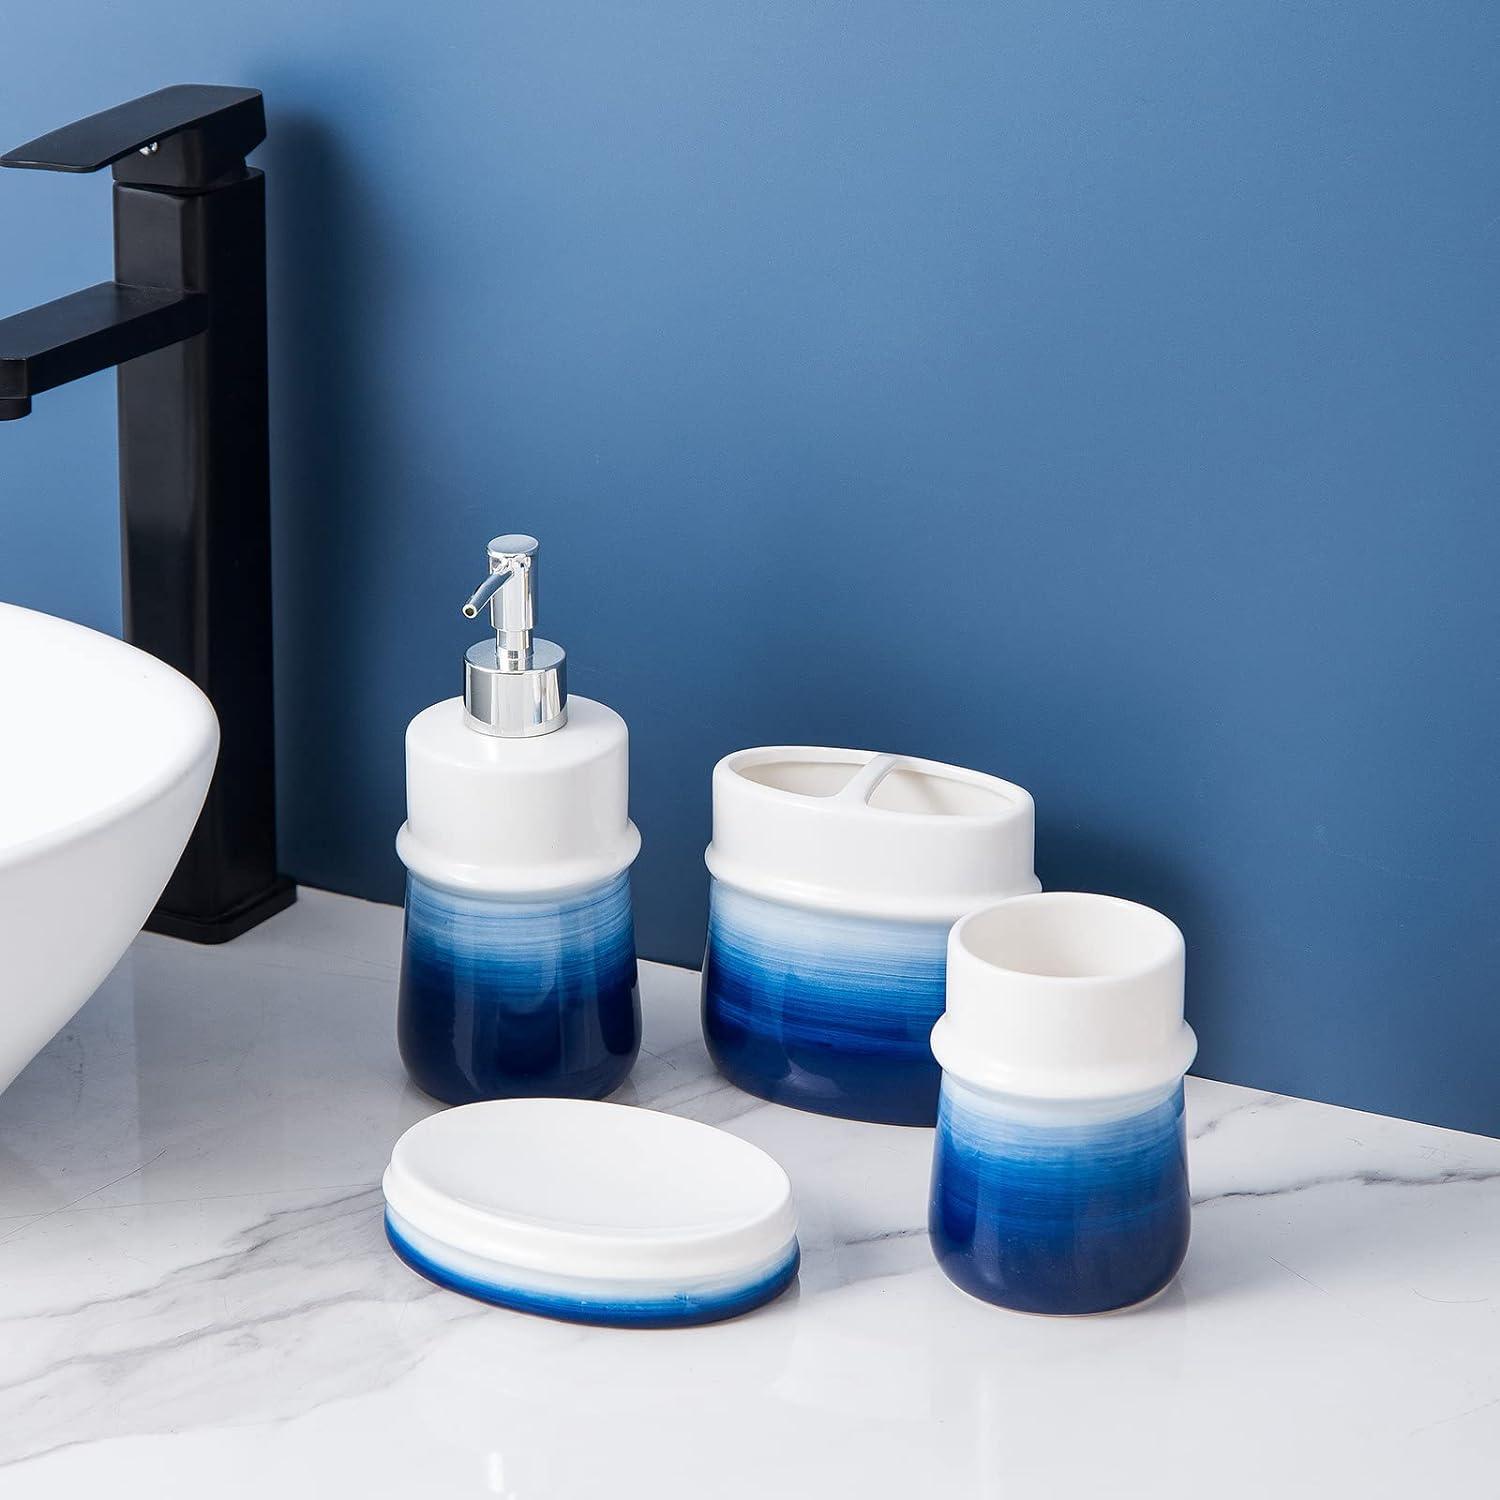 Conjunto de 6 accesorios de baño de cerámica azul oscuro